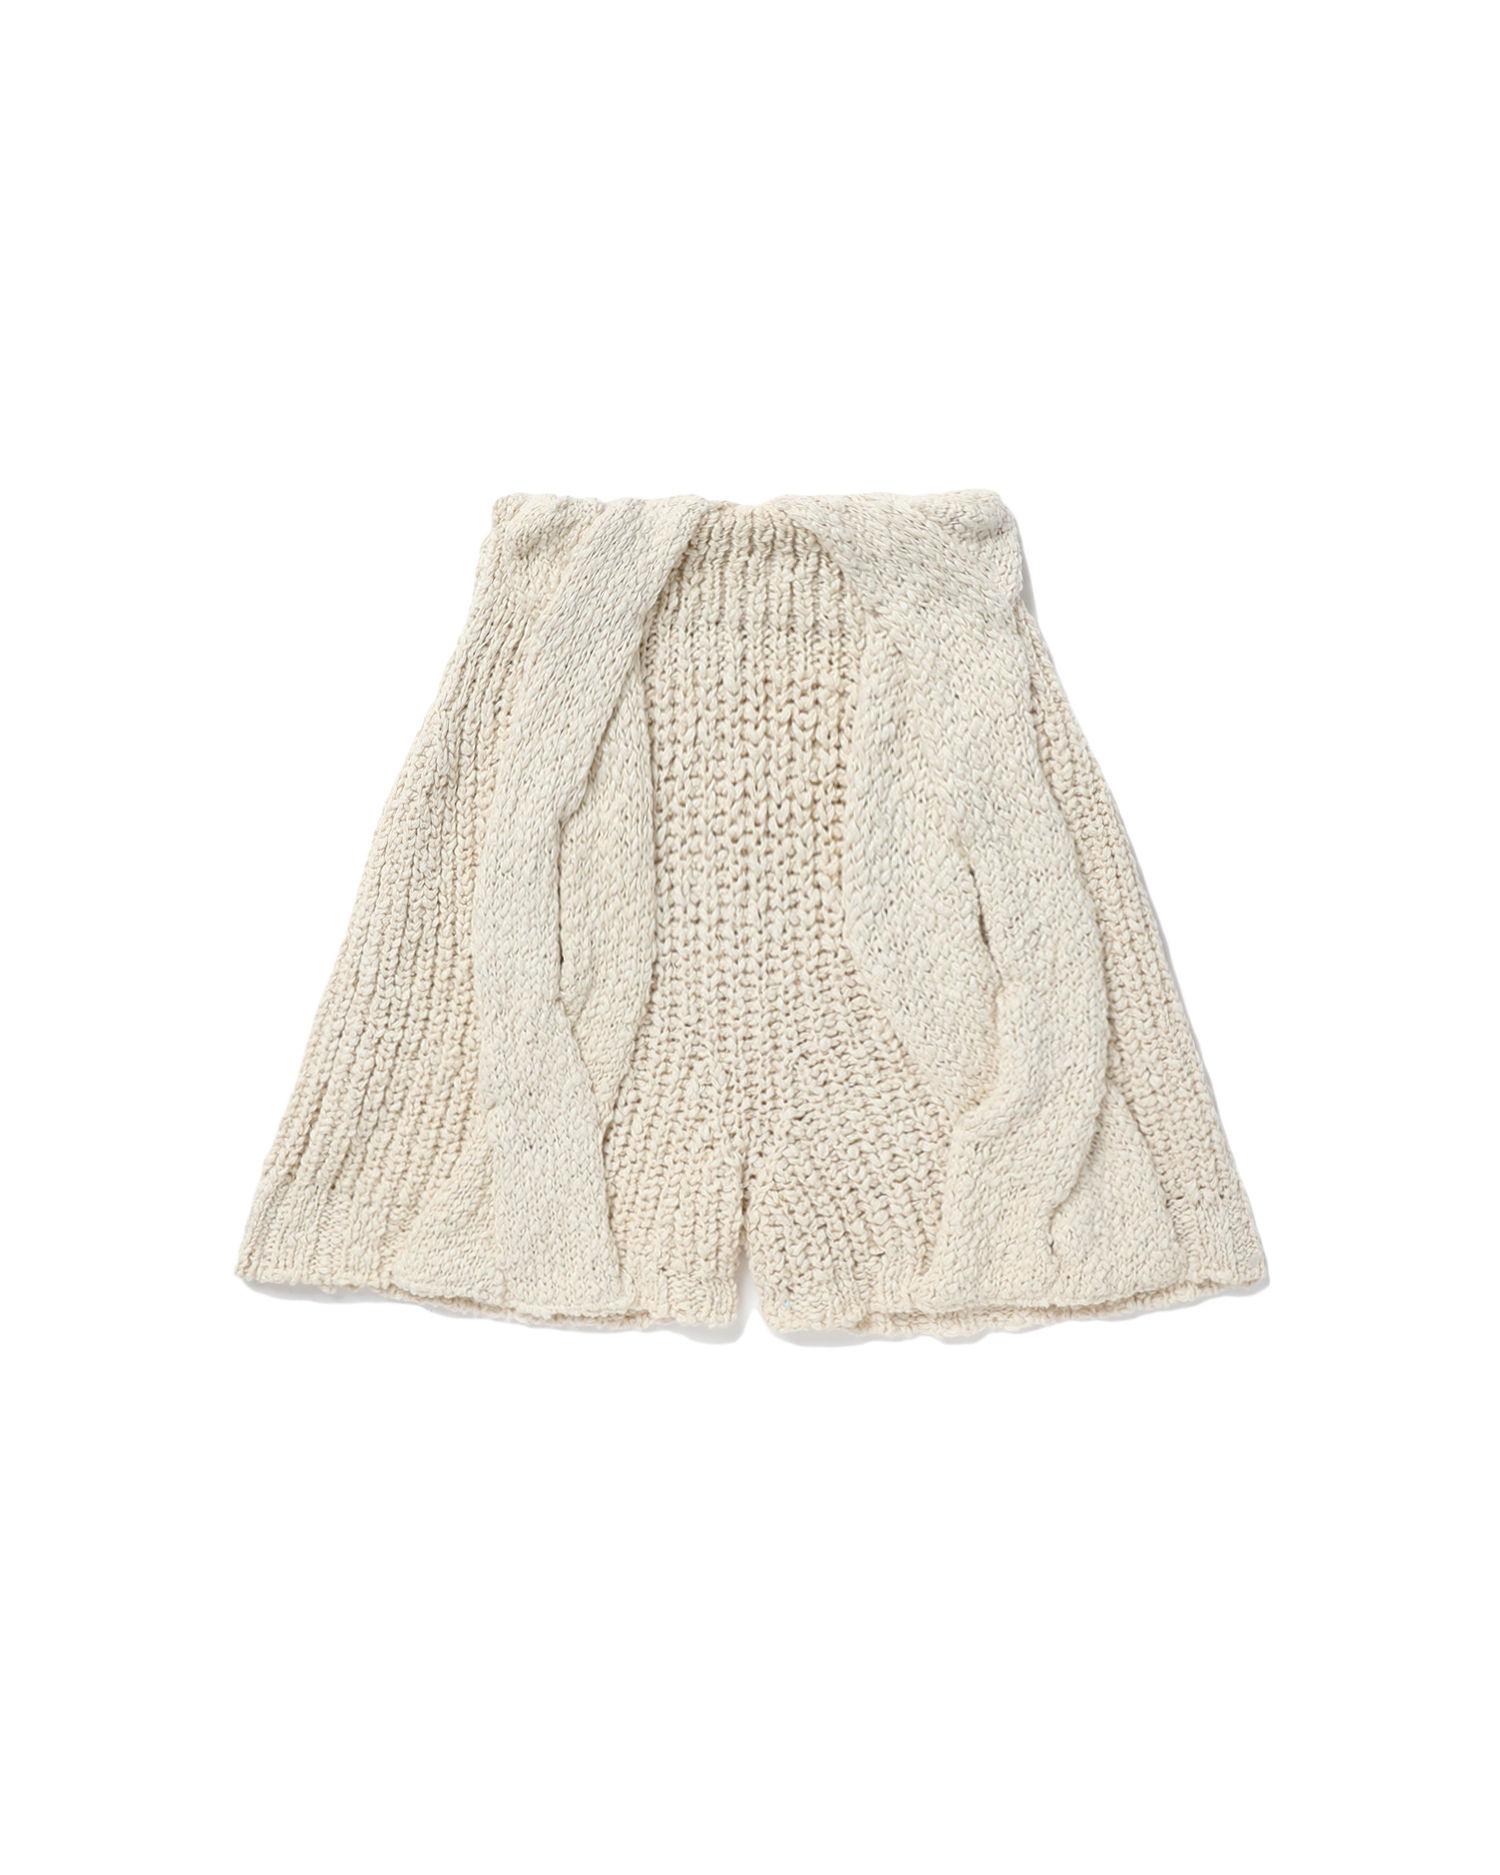 Rain rustic knit shorts by AERON